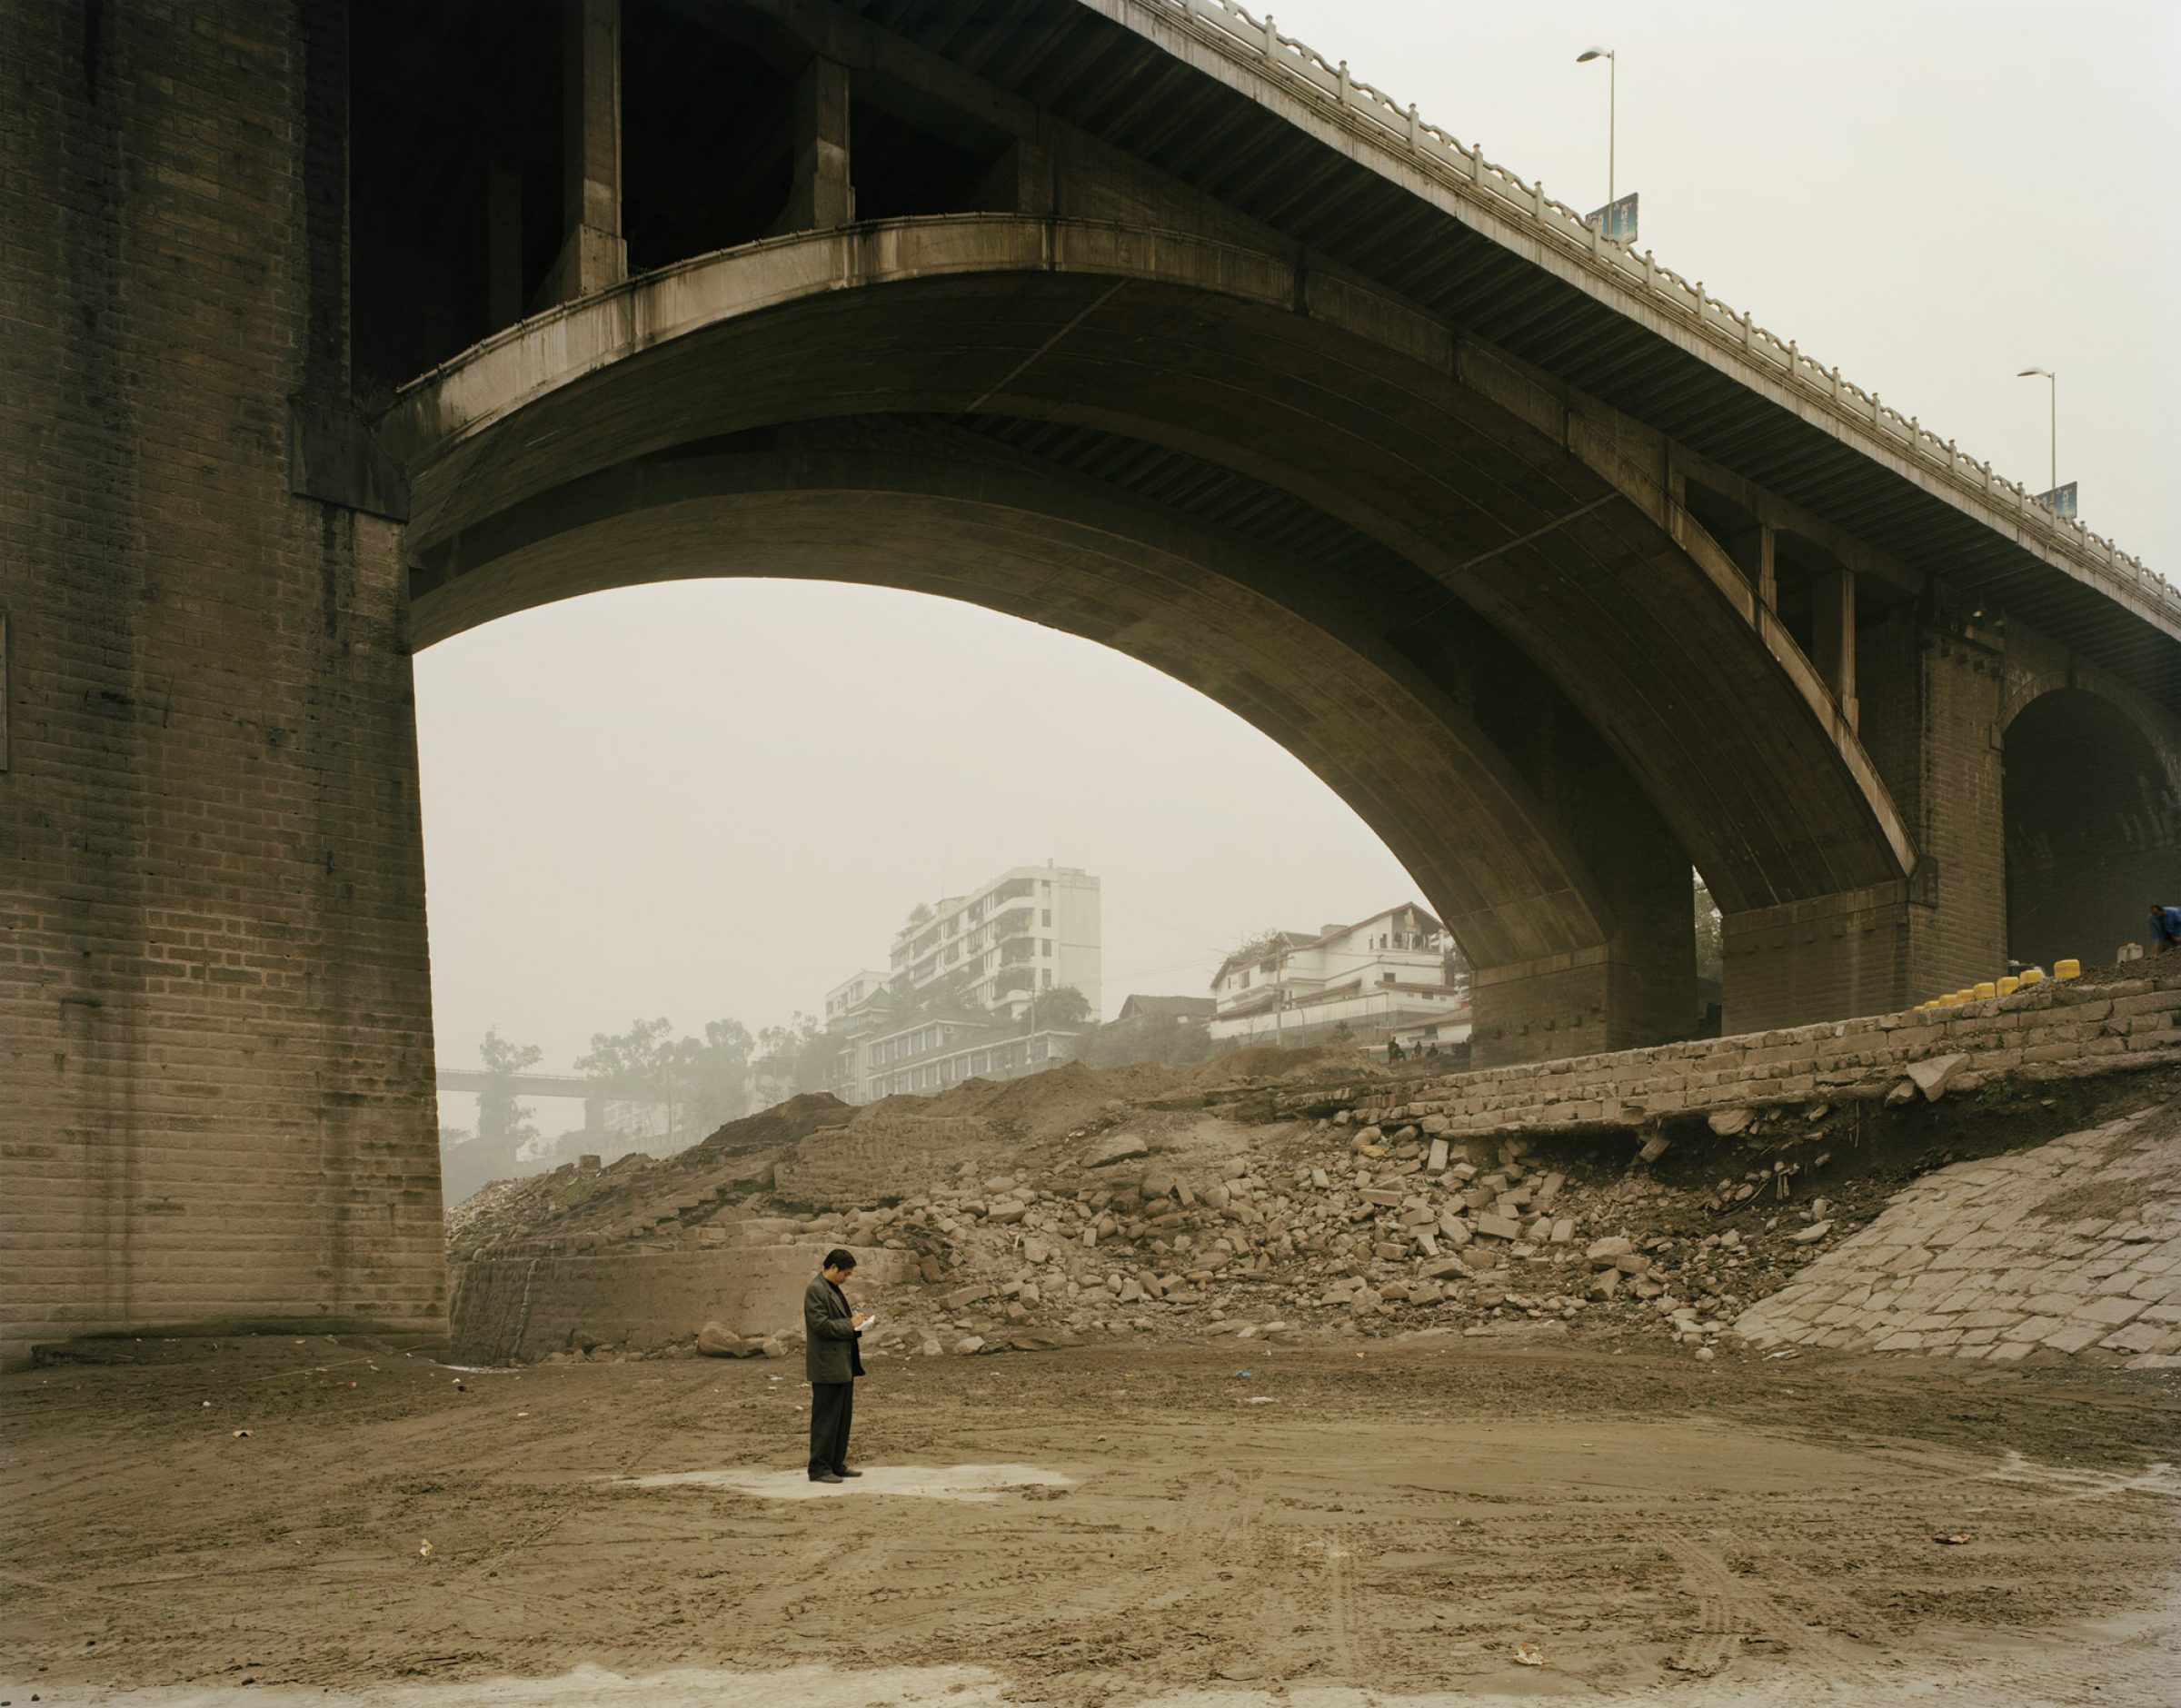 A man, standing alone under a large bridge